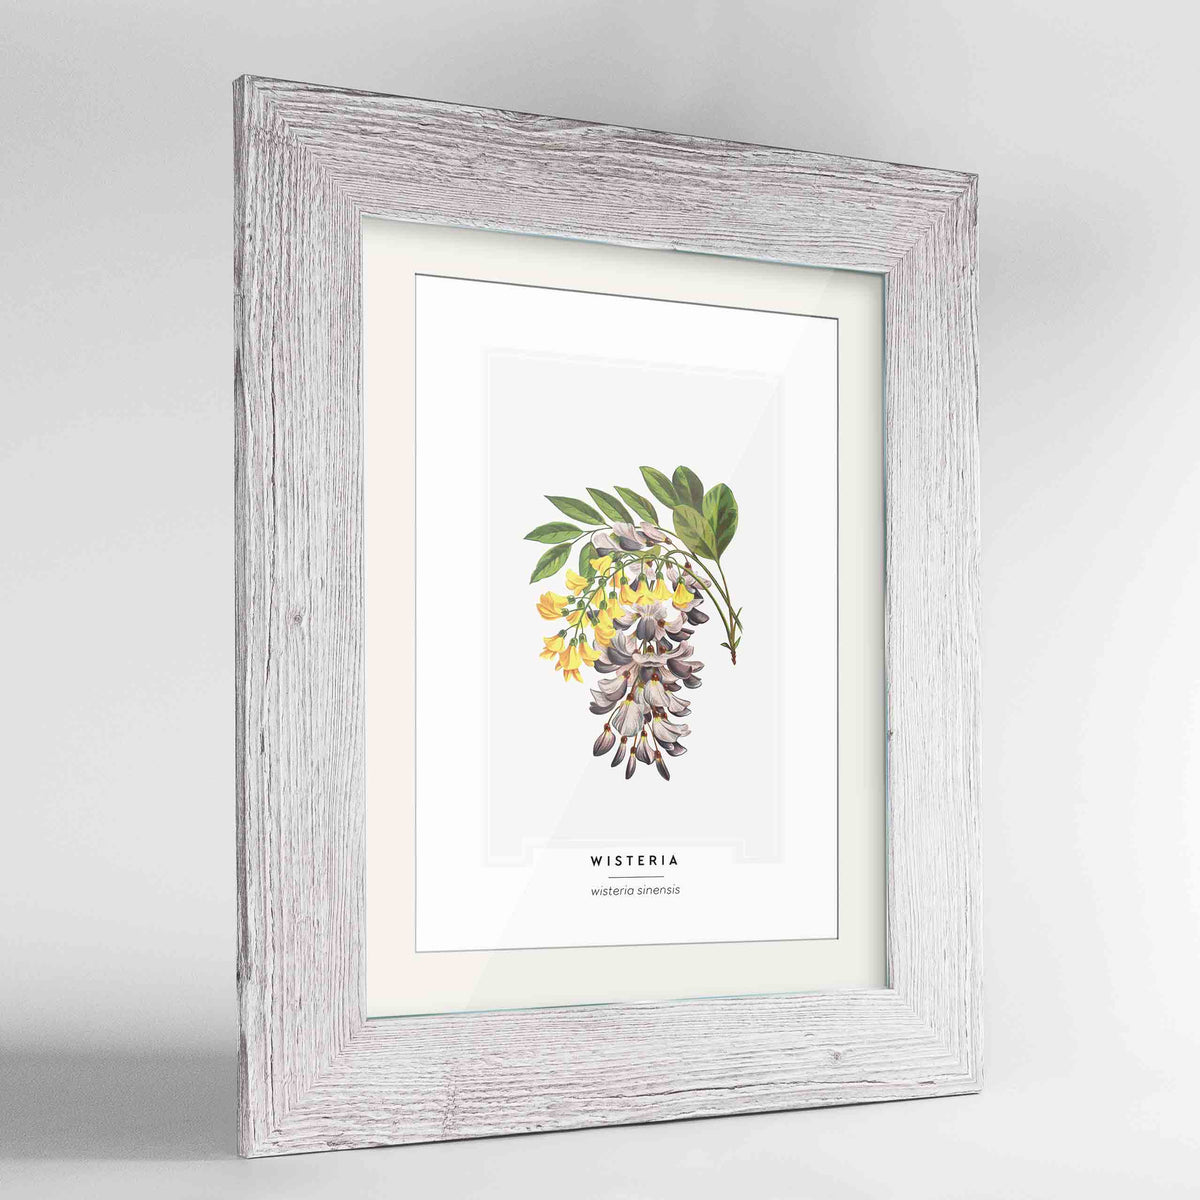 Wisteria Botanical Art Print - Framed